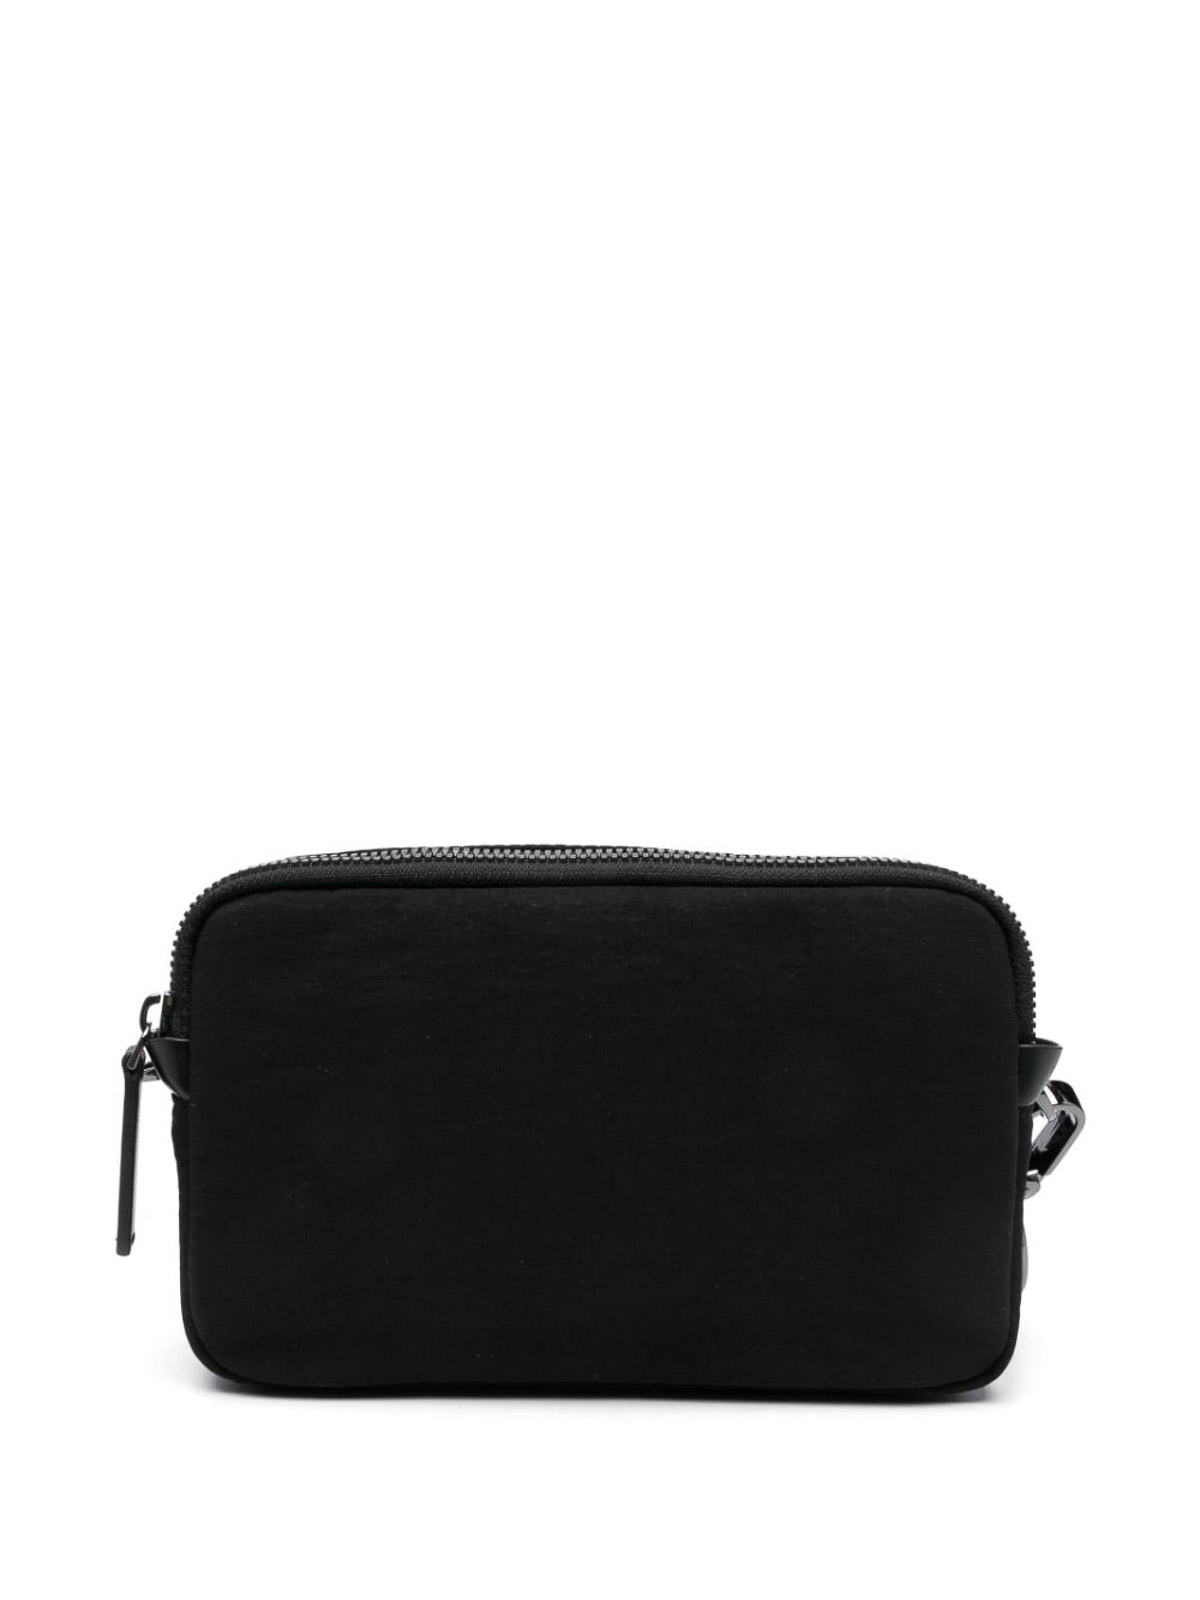 Crossbody Bag In Nylon And Pebbled Leather by Giorgio Armani Men